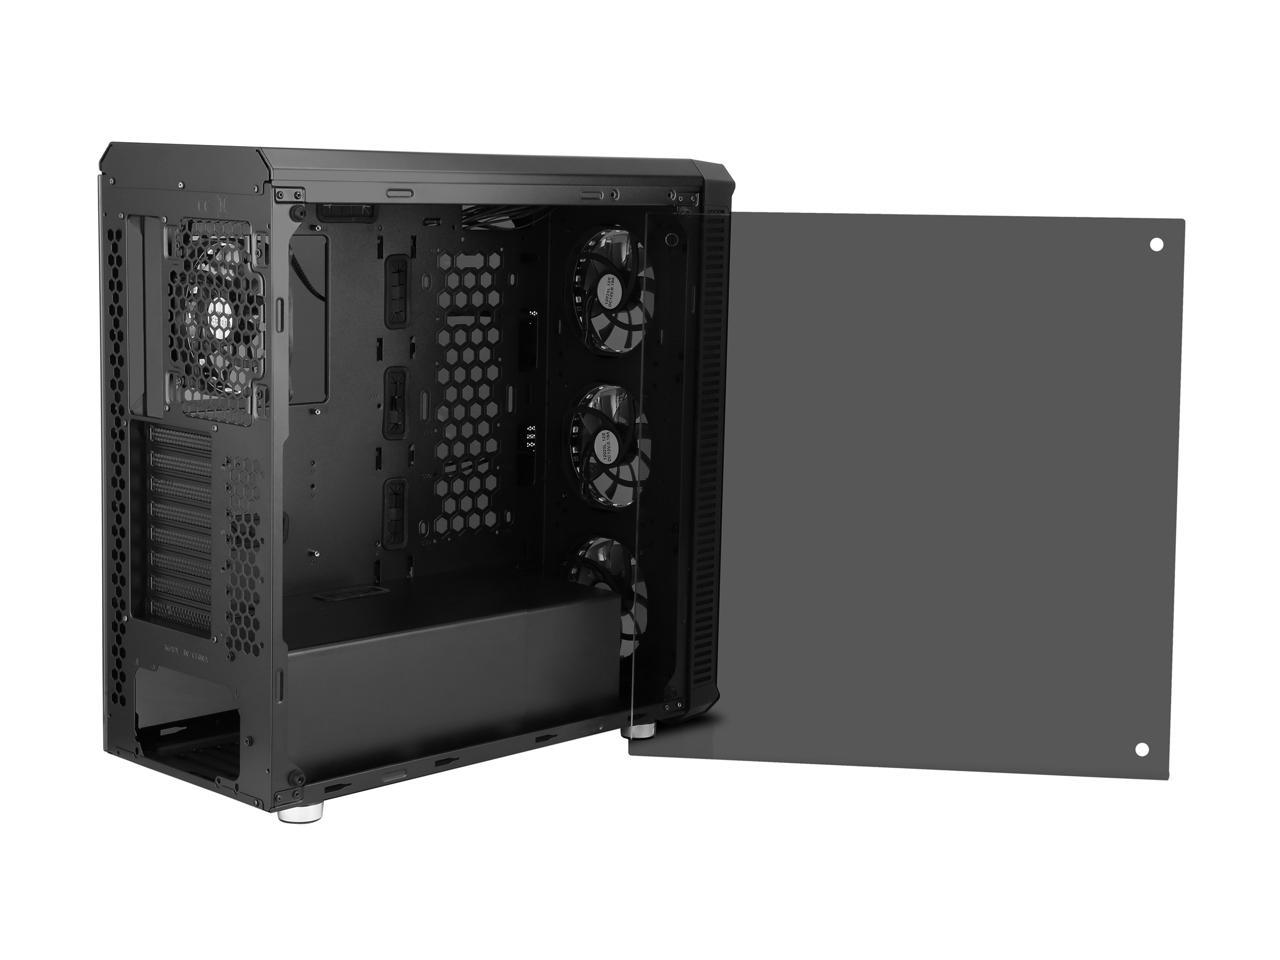 Diypc Vanguard-Rgb Black Dual Usb3.0 Steel/ Tempered Glass Atx Mid Tower Gaming Computer Case